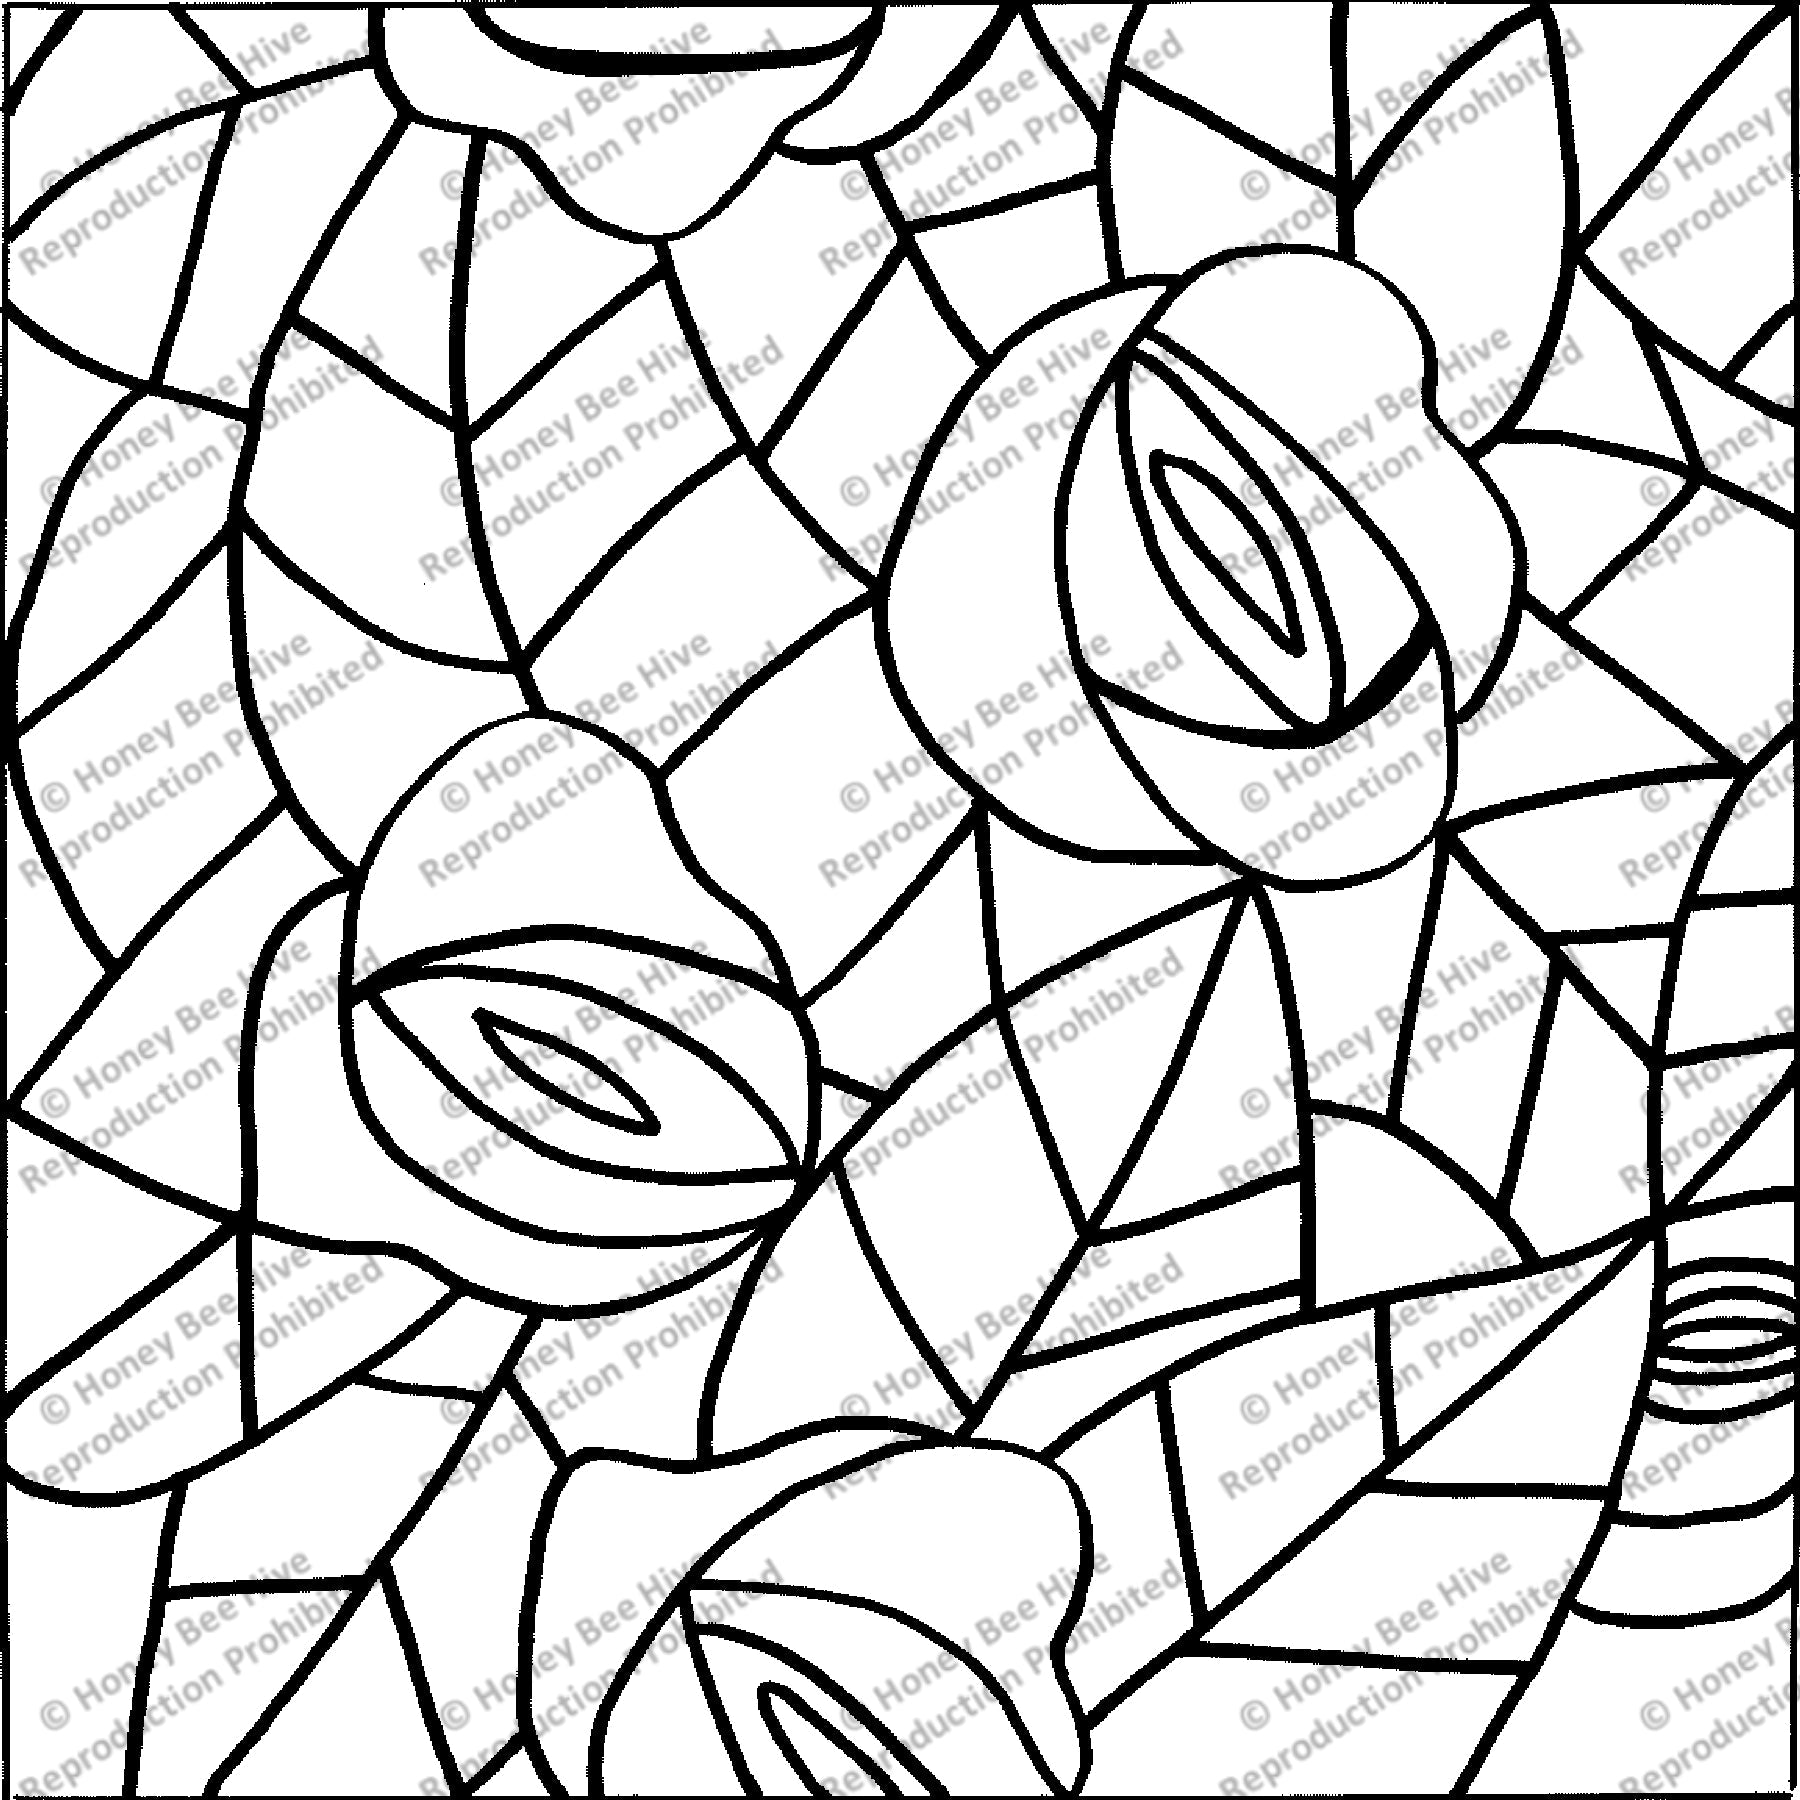 A Dozen Roses Adaptation, rug hooking pattern